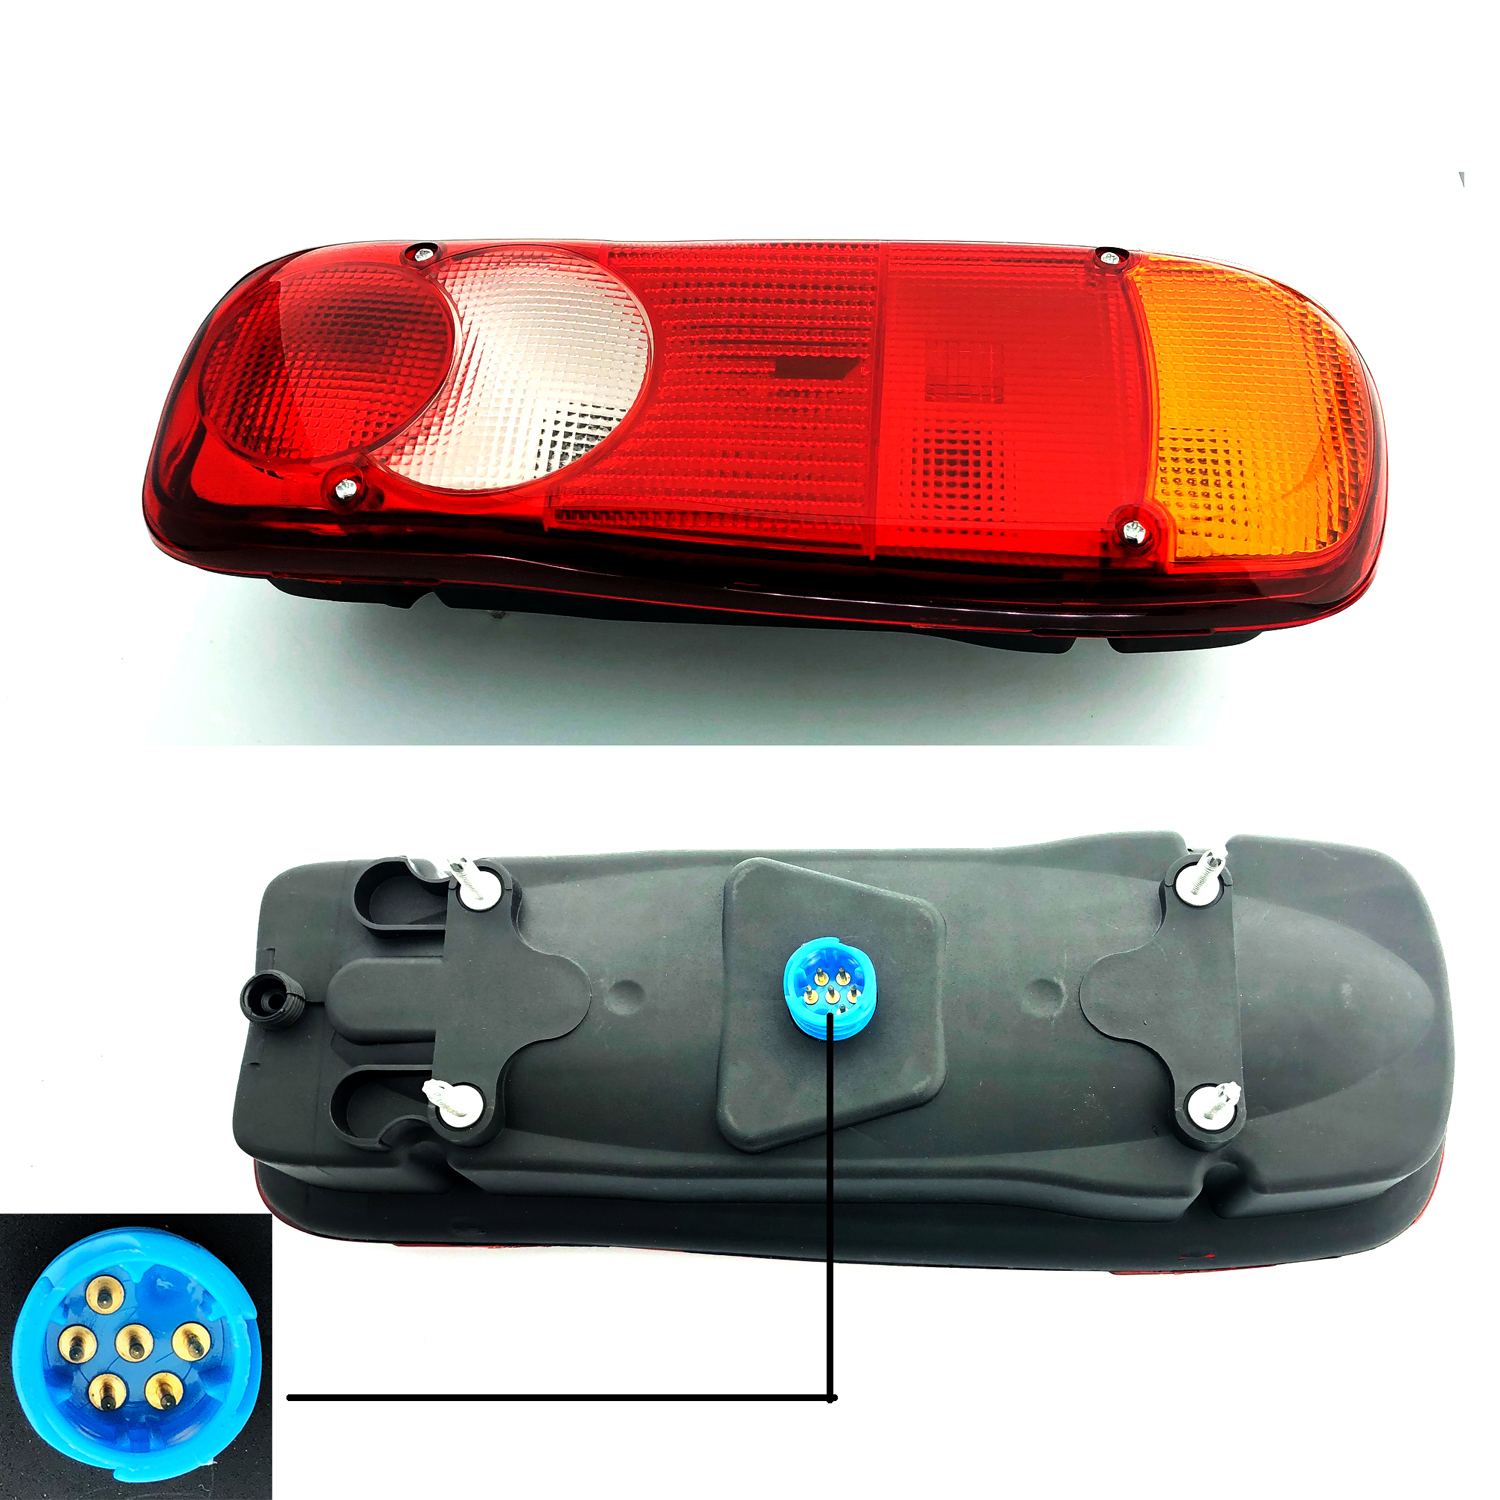 FIAT Ducato Chasis Cab ( Lamp Lights) VAN REAR LAMP LIGHT LEFT HAND ( UK Passenger Side ) 2012 to 2021 – VAN REAR LAMP LIGHT